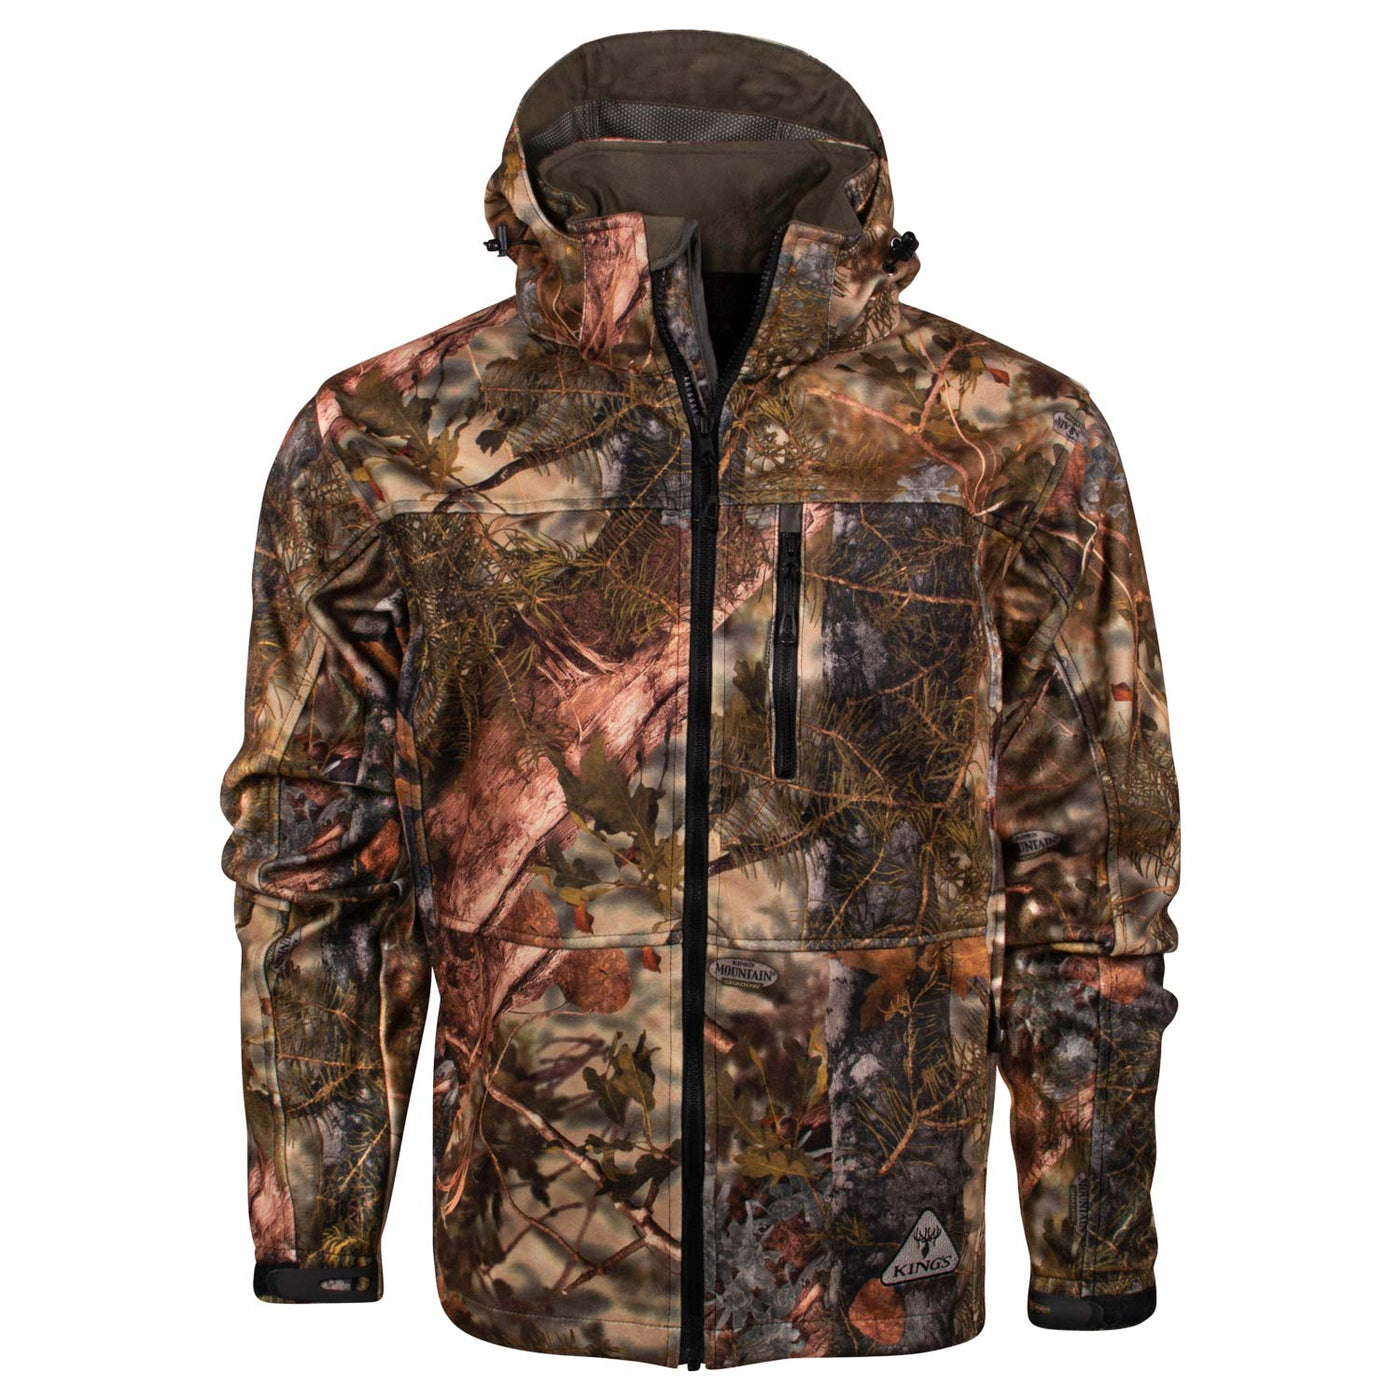 Hunter Series Wind-Defender Fleece Jacket in Mountain Shadow | Corbotras lochi